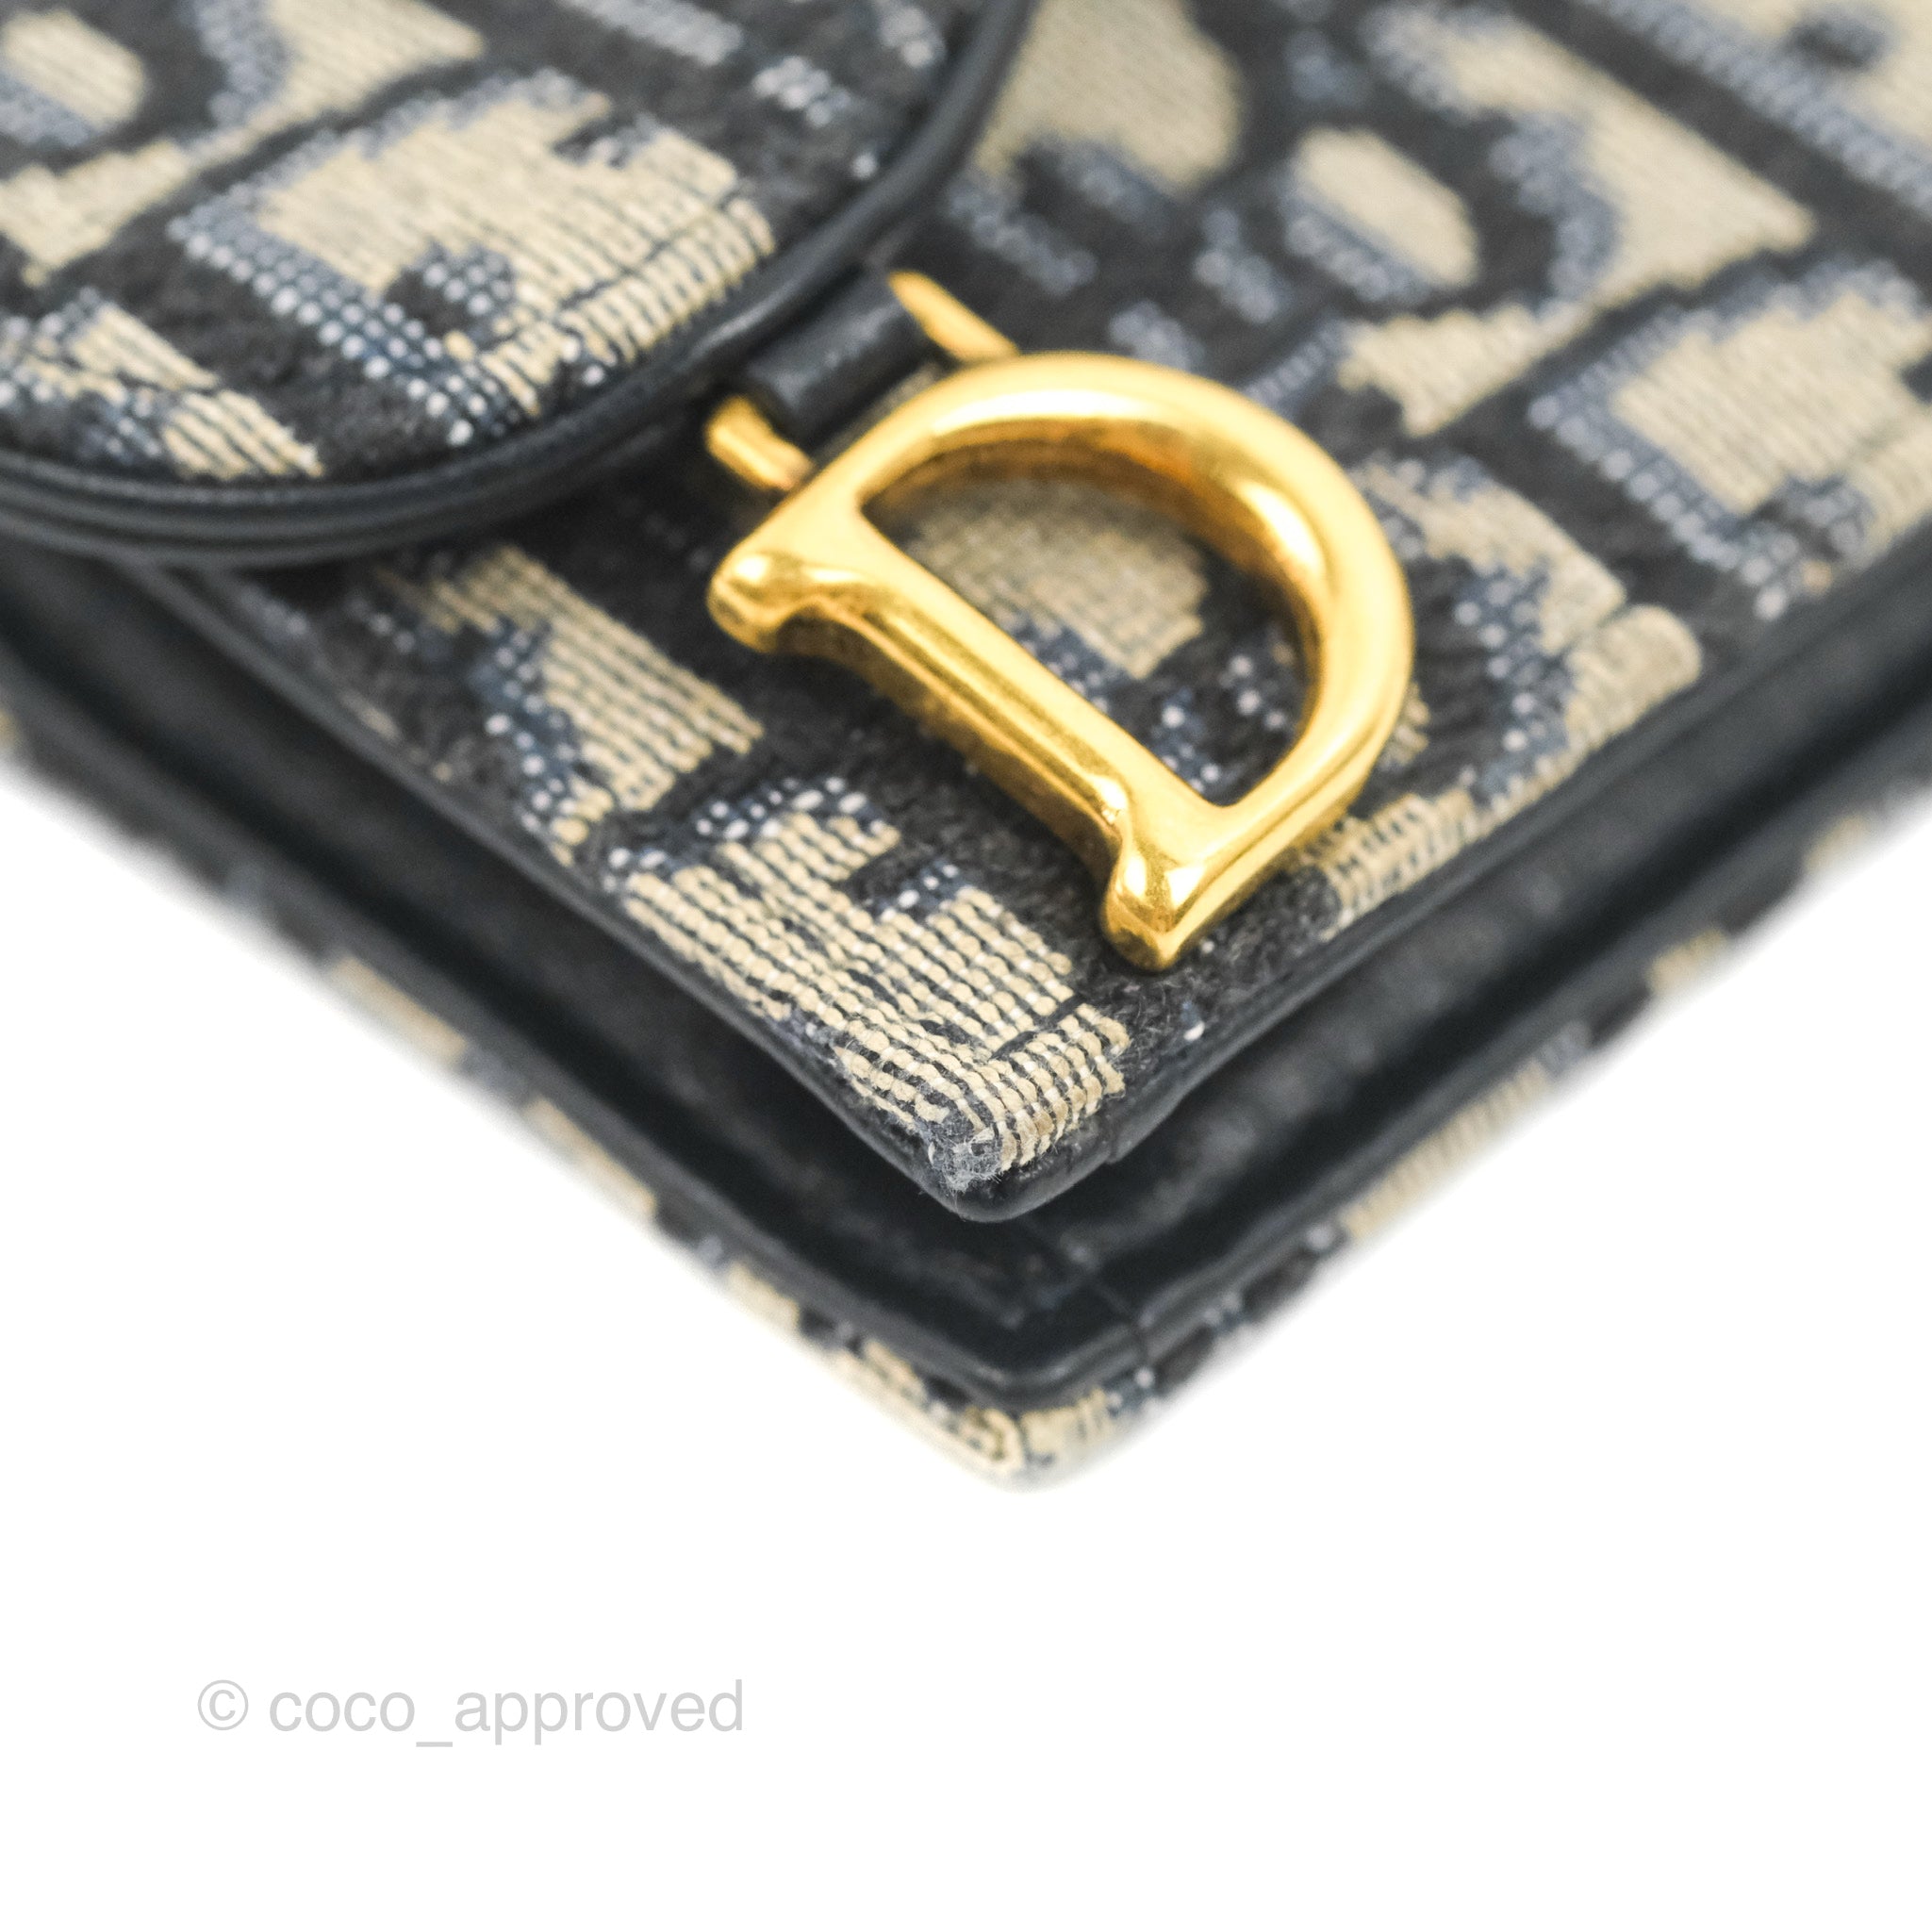 Shop authentic Dior Alex Foxton Oblique Limited Edition Coin Case at  revogue for just USD 45500